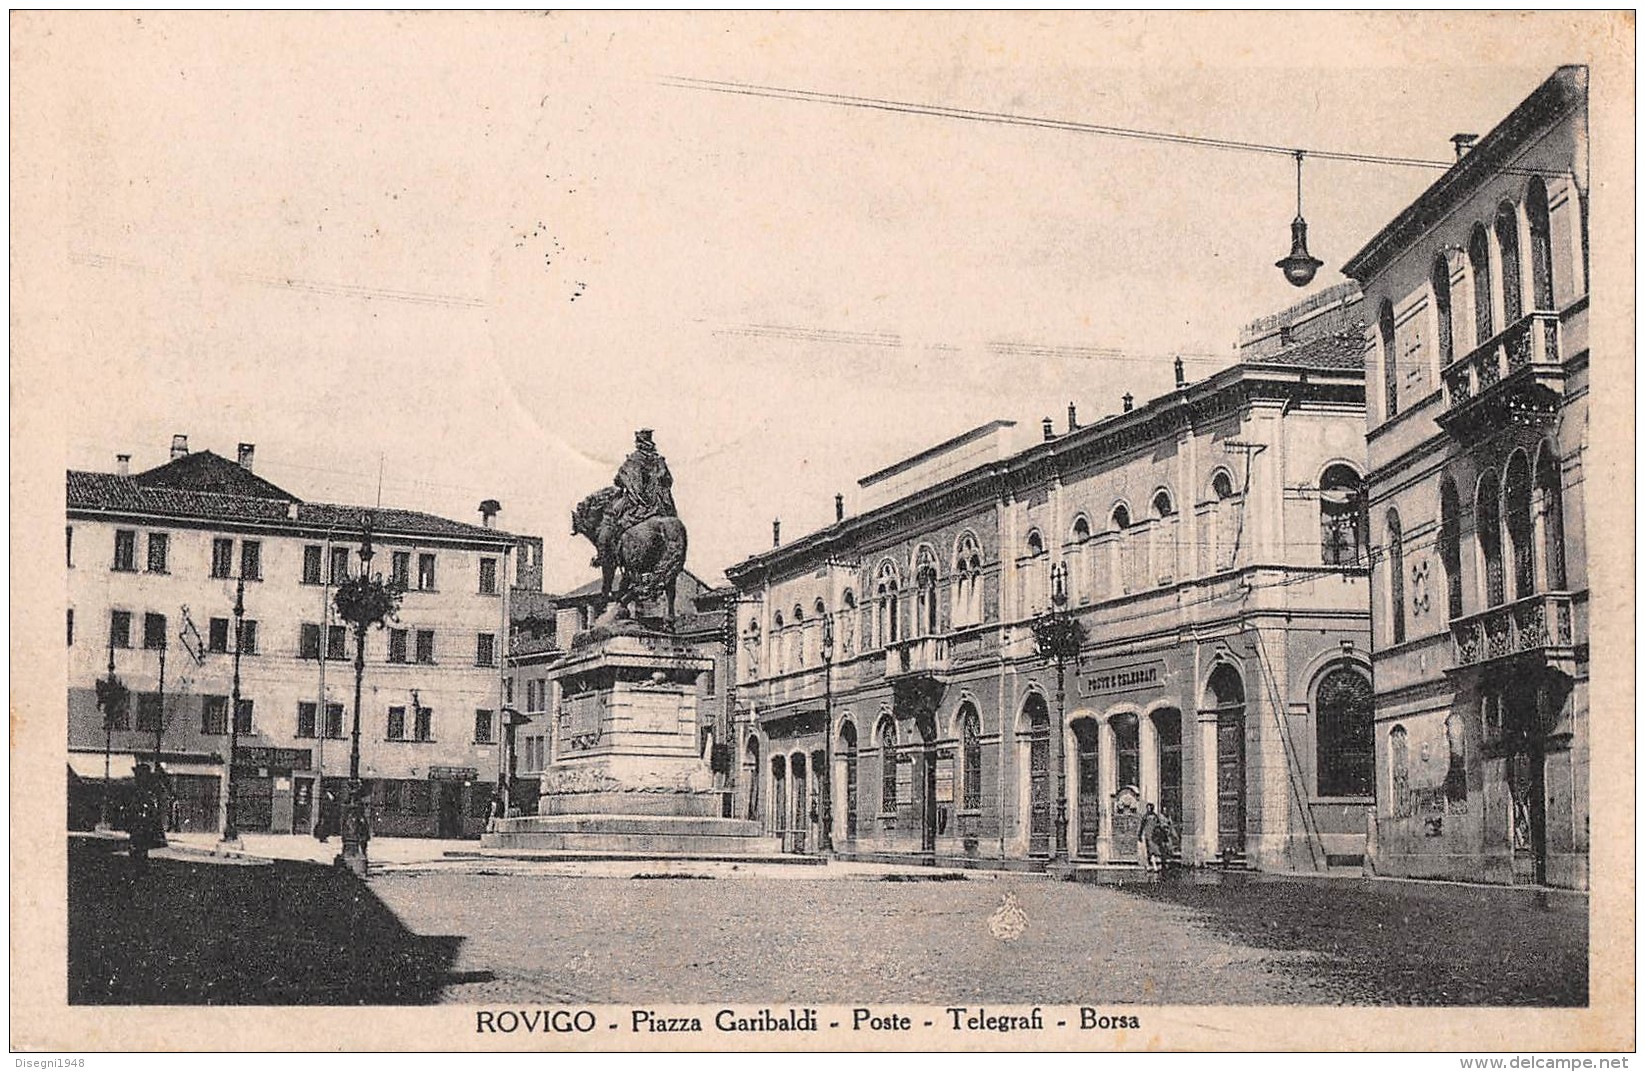 06407 "ROVIGO - PIAZZA GARIBALDI - POSTE - TELEGRAFI - BORSA" CART. ILL. ORIG. SPED. 1930 - Rovigo